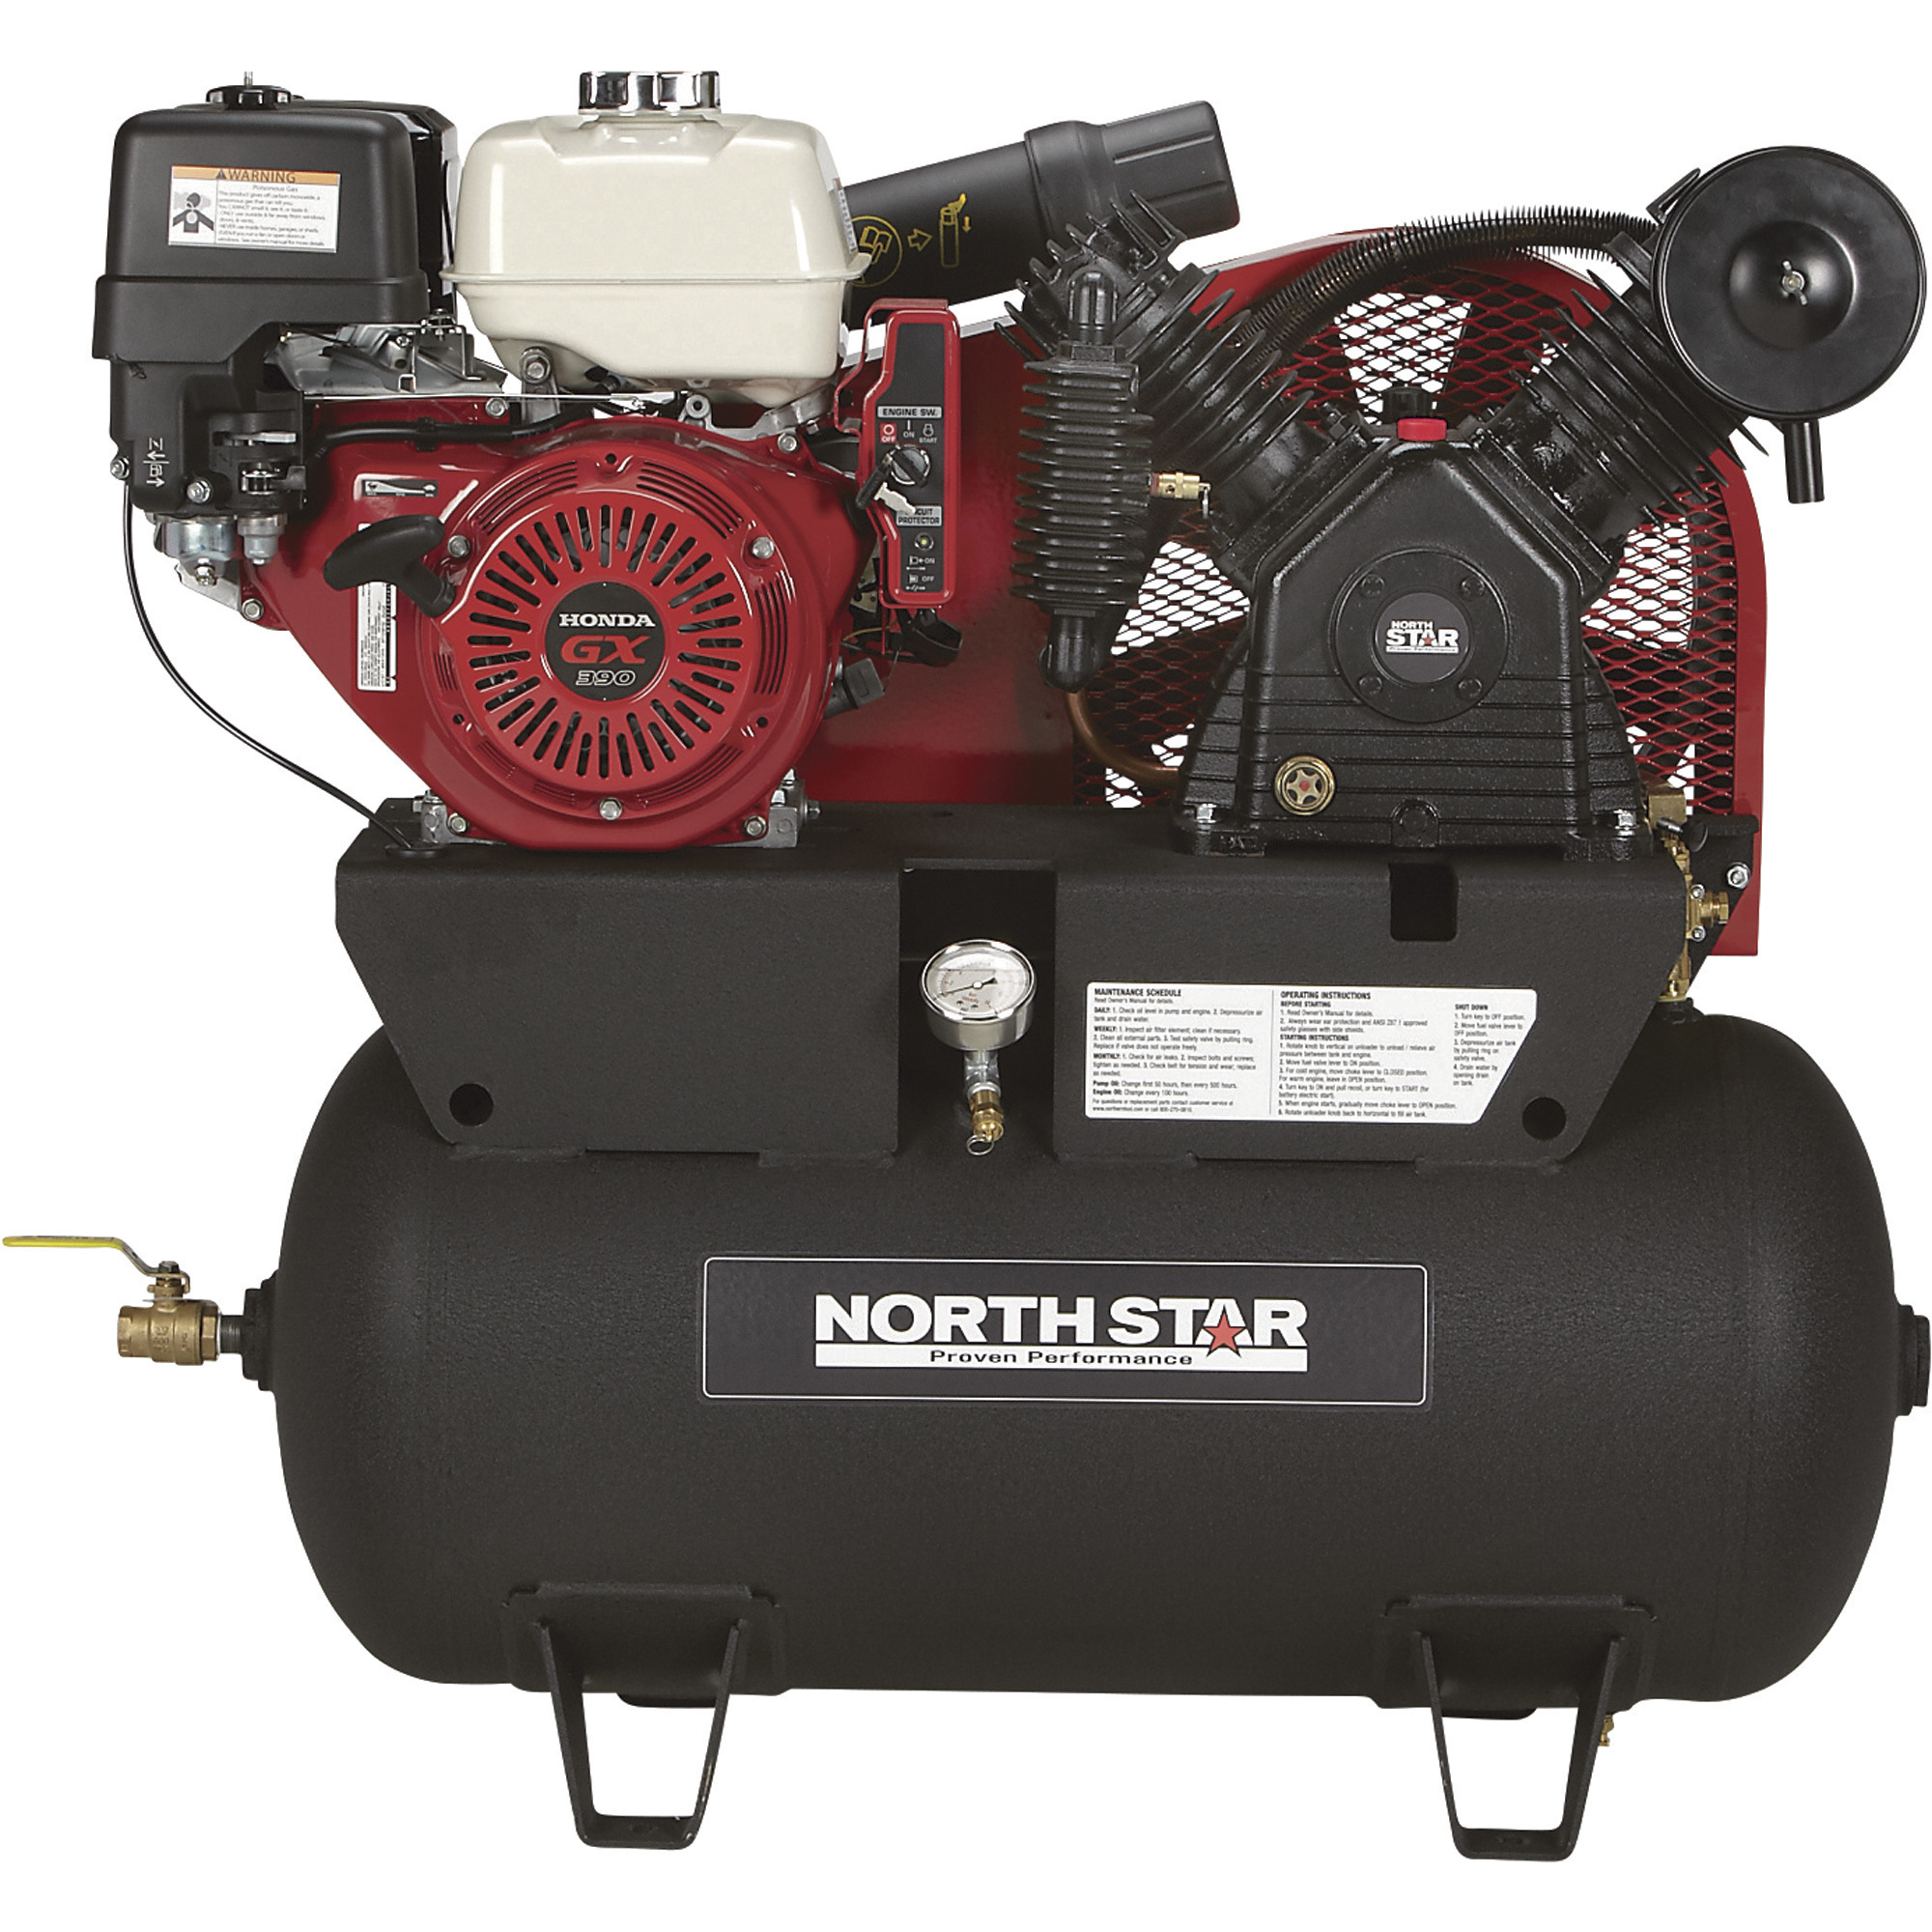 NorthStar Portable Gas Air Compressor - 30-Gallon Horizontal, 24.4 CFM @ 90 PSI, Honda GX390 OHV Engine -  459382